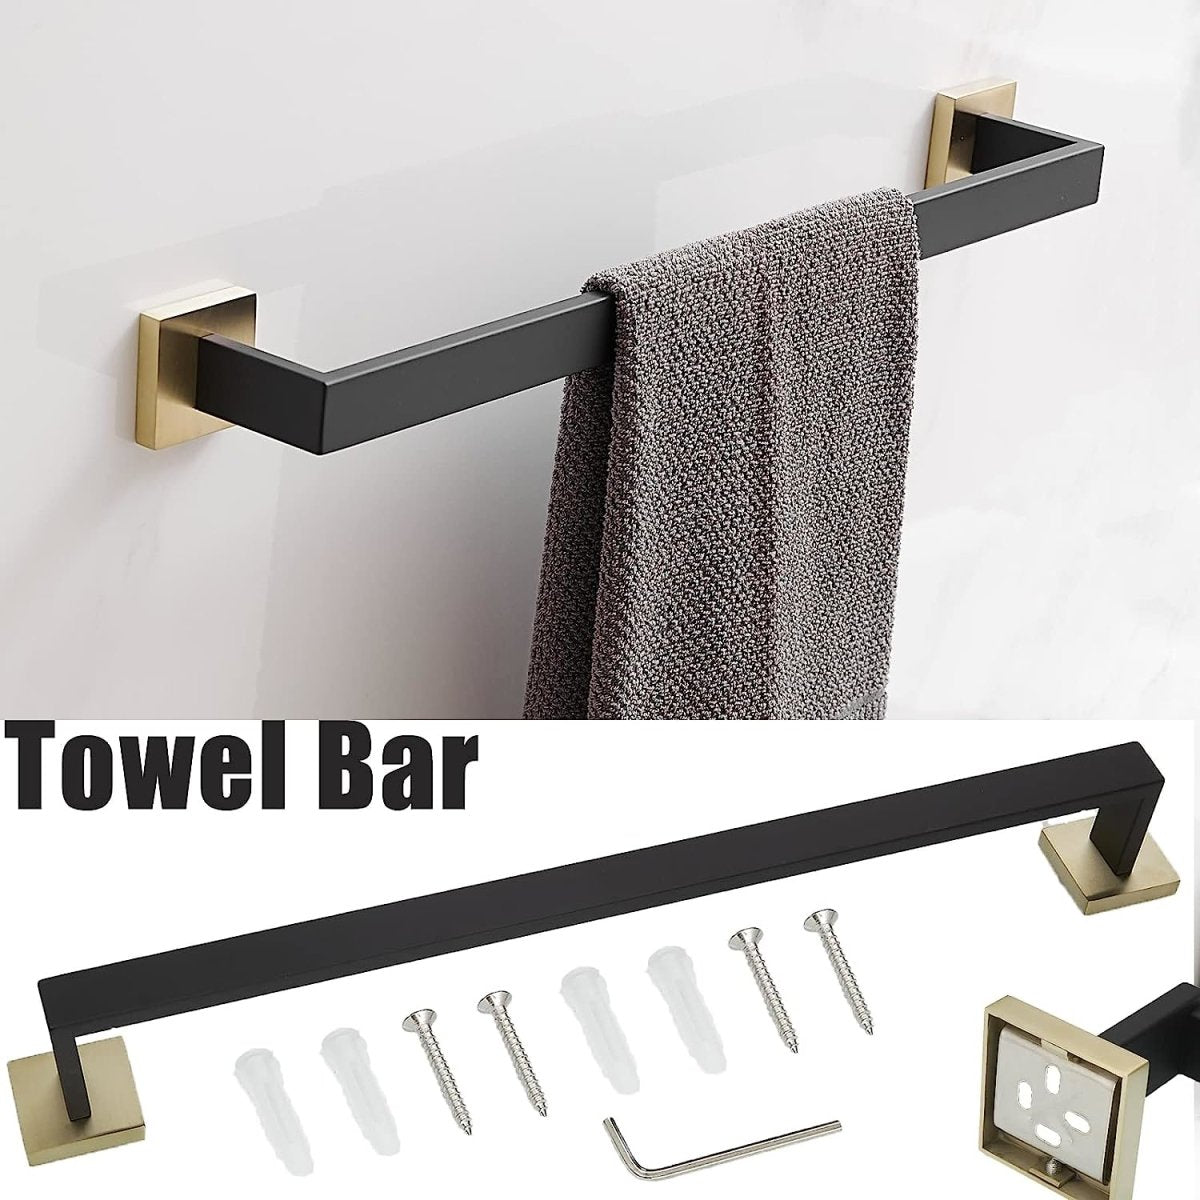 5PCS Bath Hardware Set Toilet Paper Holder Towel Bar Black Gold - buyfaucet.com